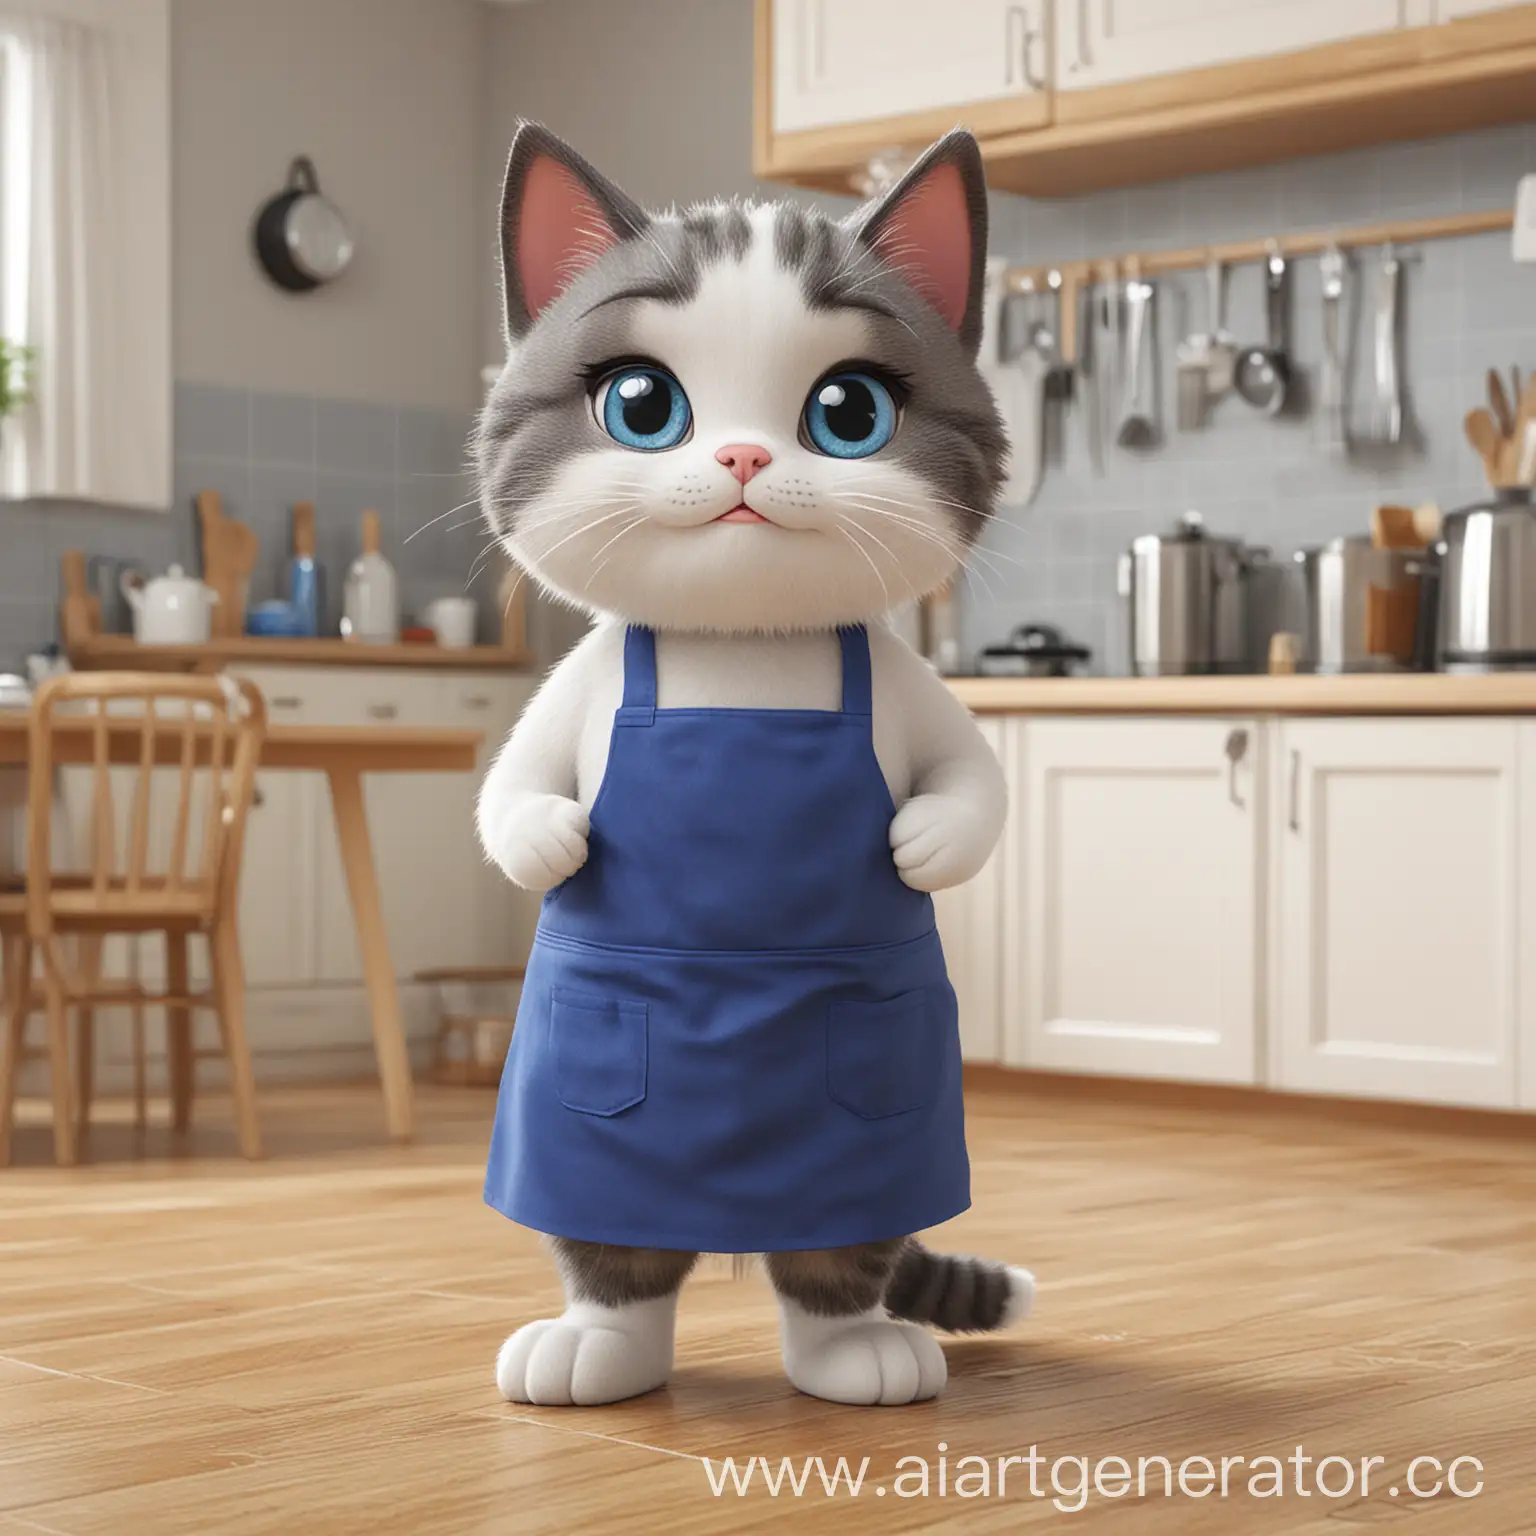 3D家政卡通猫，要胖，可爱带着蓝色围裙，手上拿着抹布，打扫卫生，以厨房为背景

